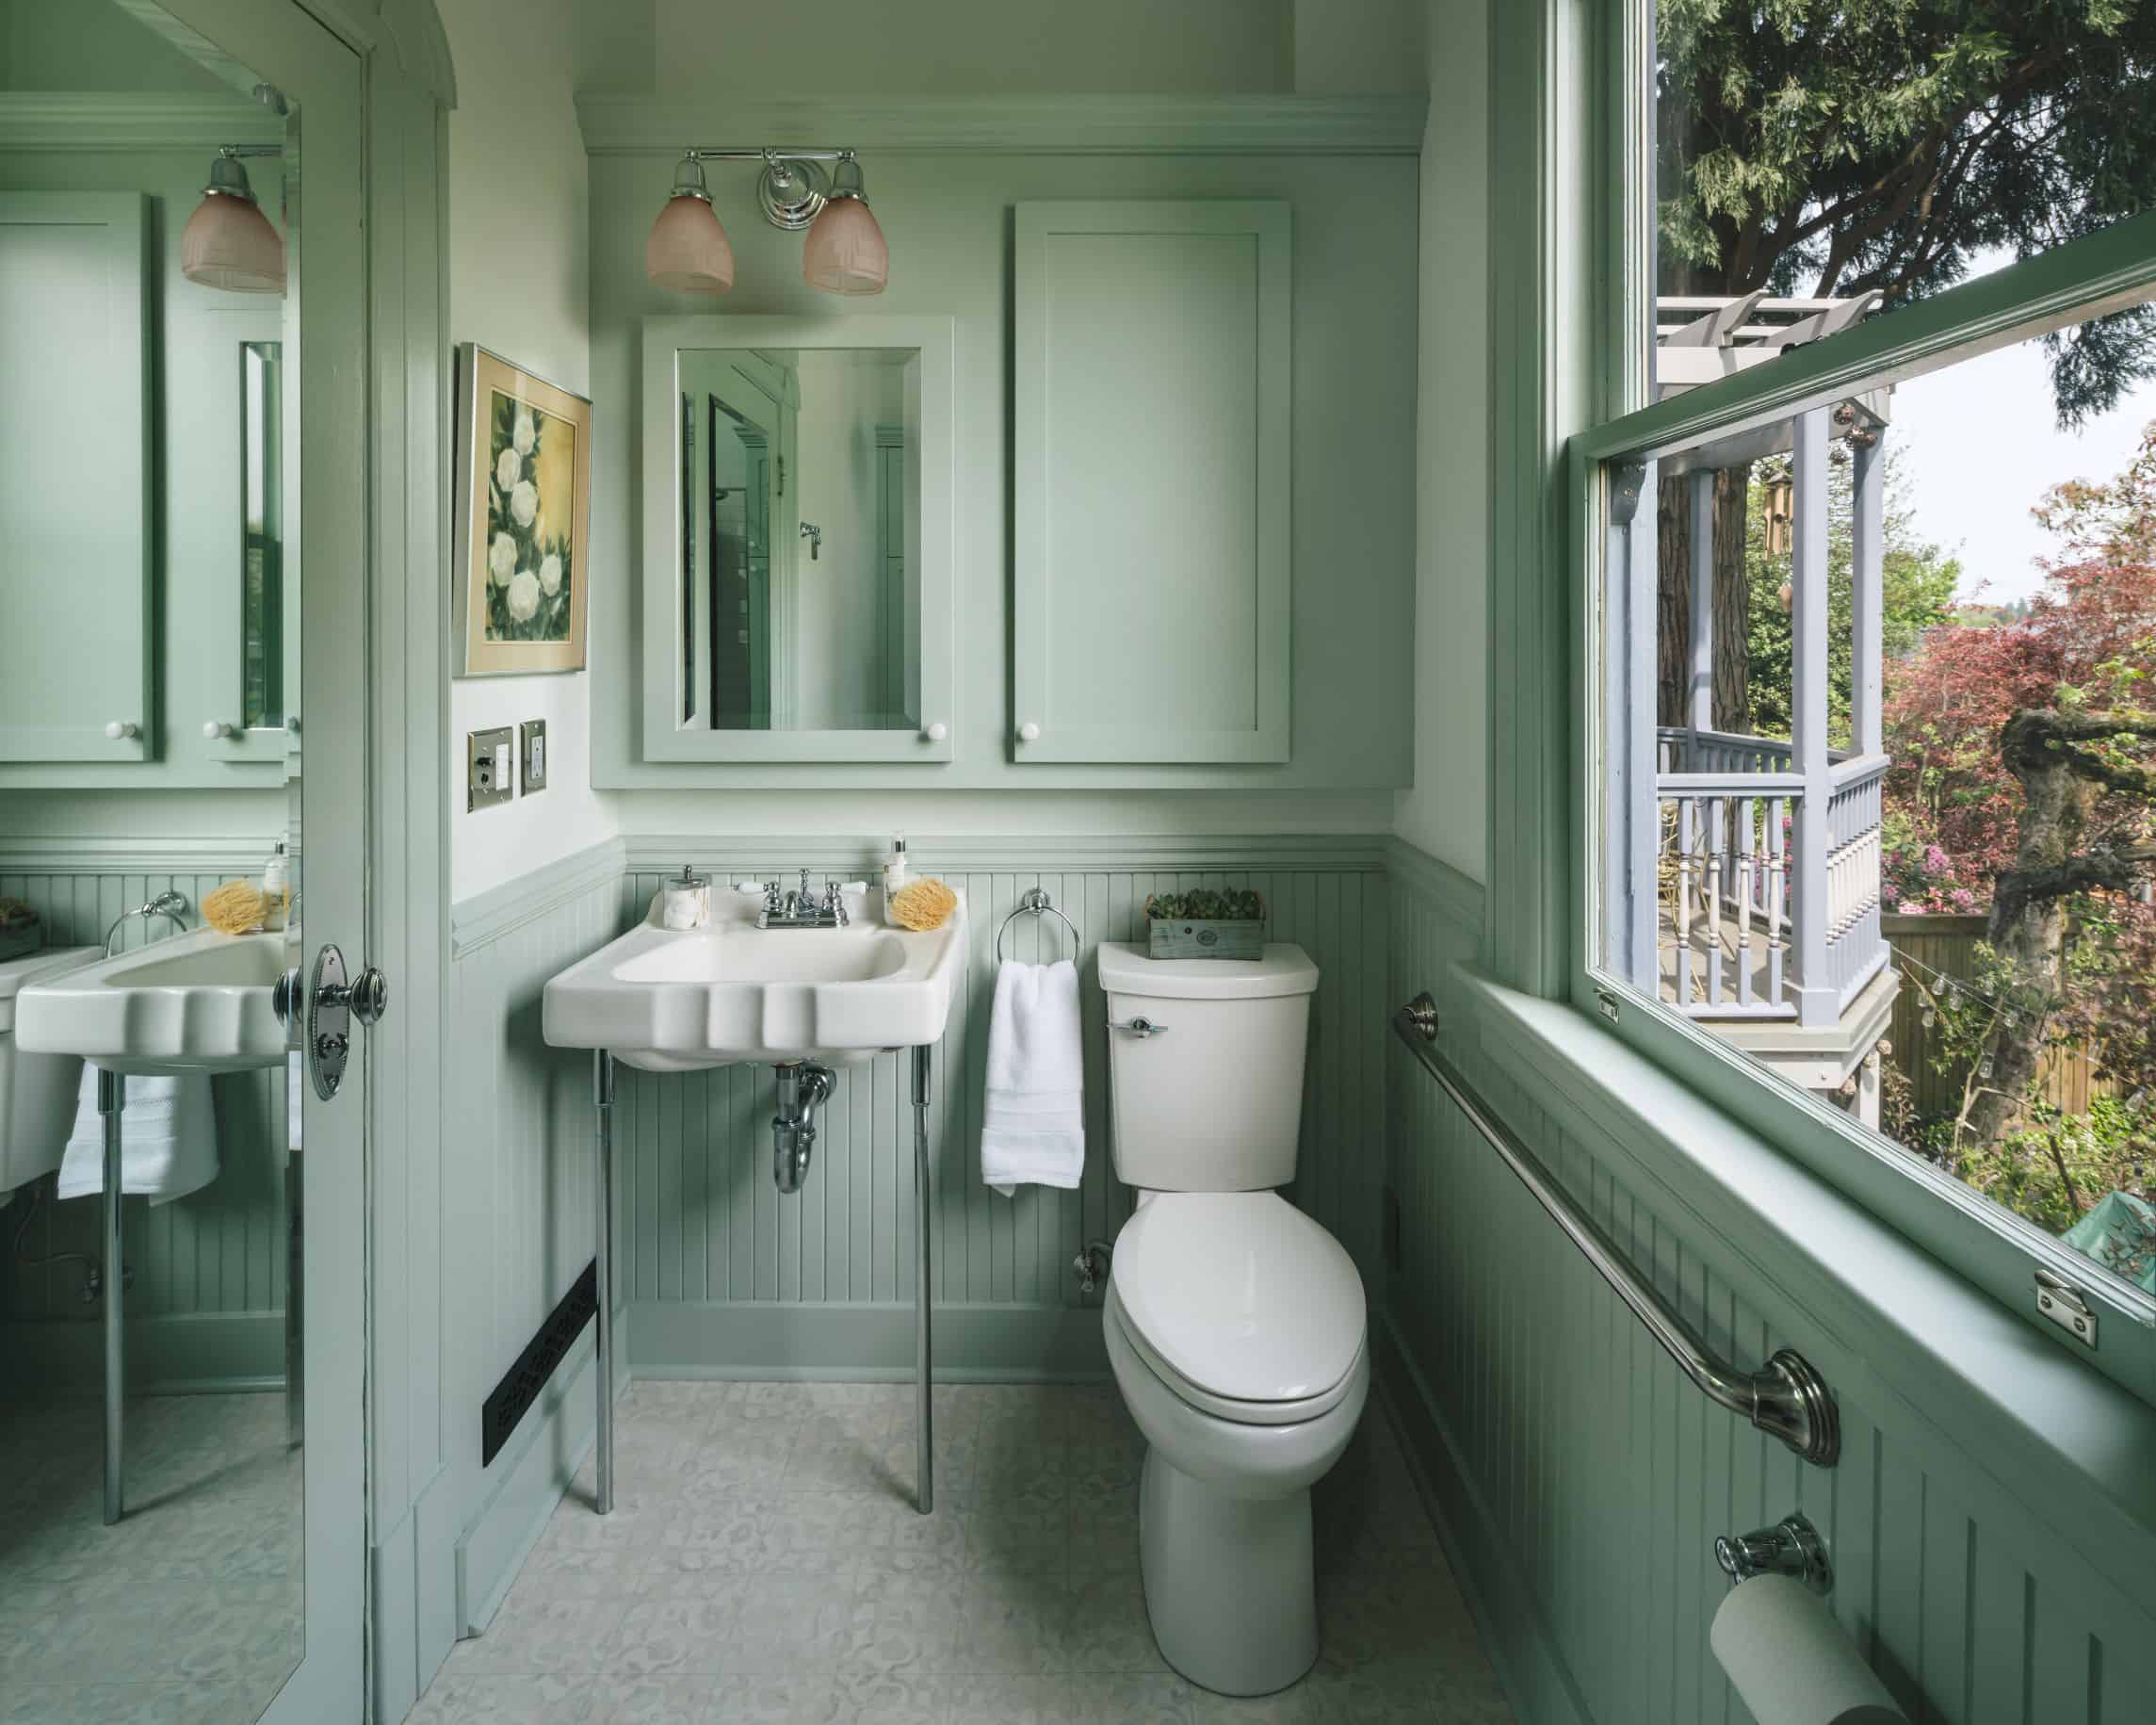 Bathroom Decor Ideas: My Favorite Stylish Options! - Driven by Decor